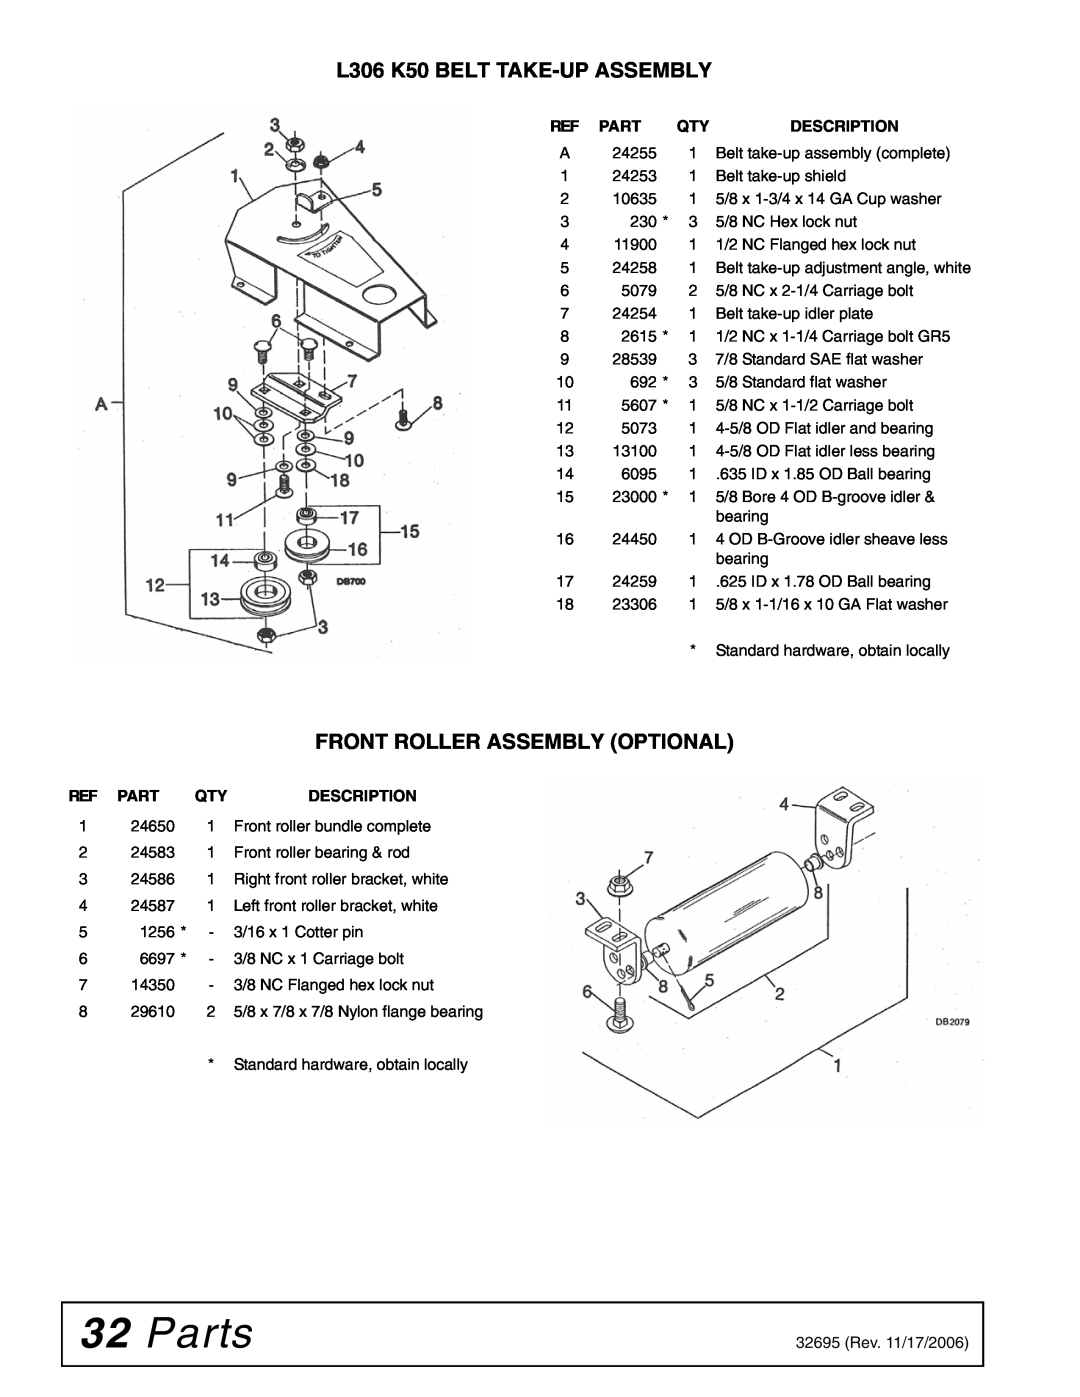 Woods Equipment manual Parts, L306 K50 BELT TAKE-UPASSEMBLY, Front Roller Assembly Optional 